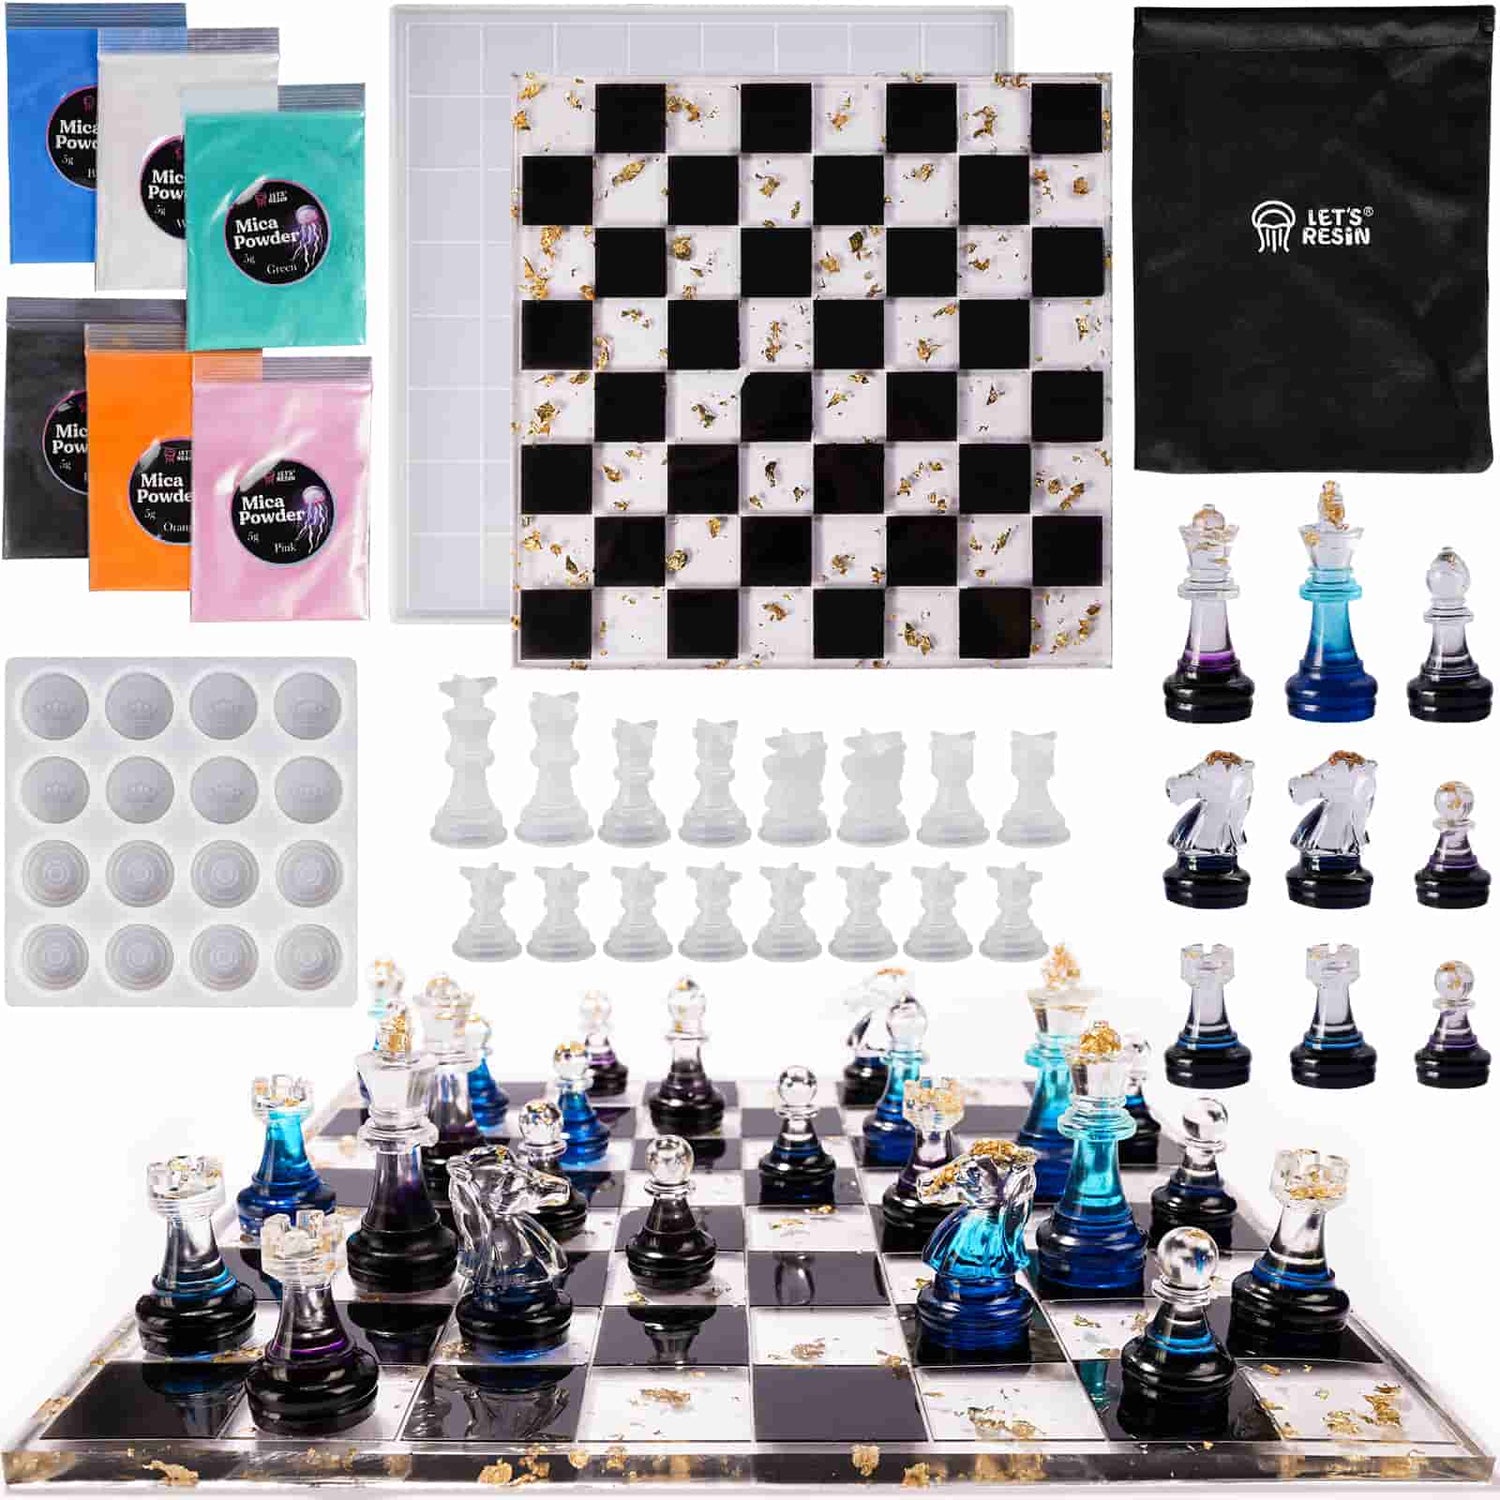 DIY Resin Chess Pieces - Resin Crafts Blog